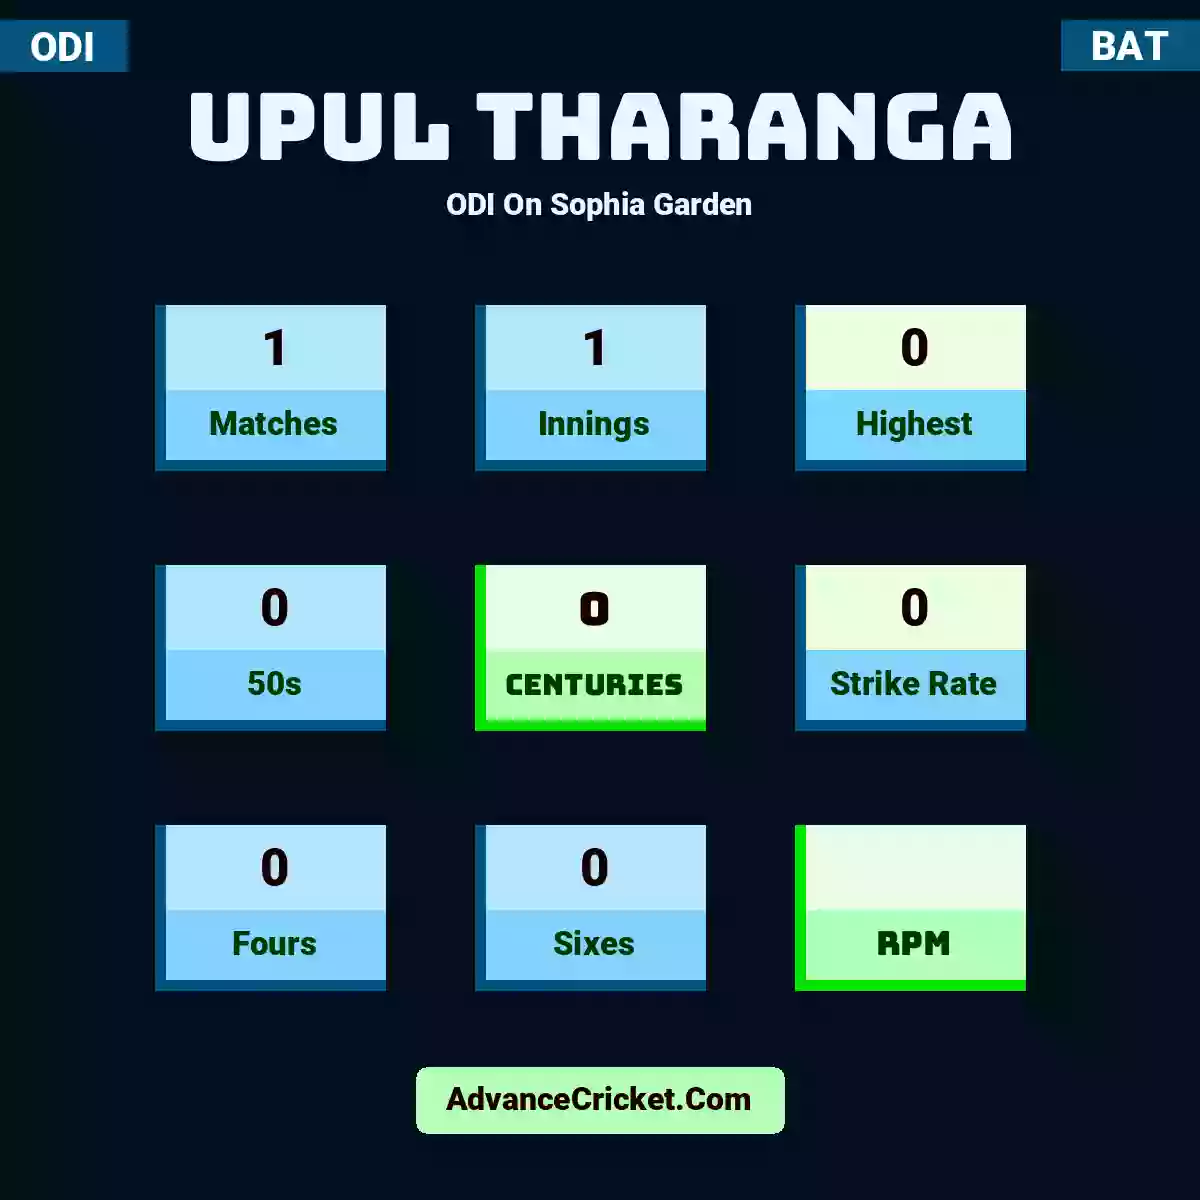 Upul Tharanga ODI  On Sophia Garden, Upul Tharanga played 1 matches, scored 0 runs as highest, 0 half-centuries, and 0 centuries, with a strike rate of 0. U.Tharanga hit 0 fours and 0 sixes.